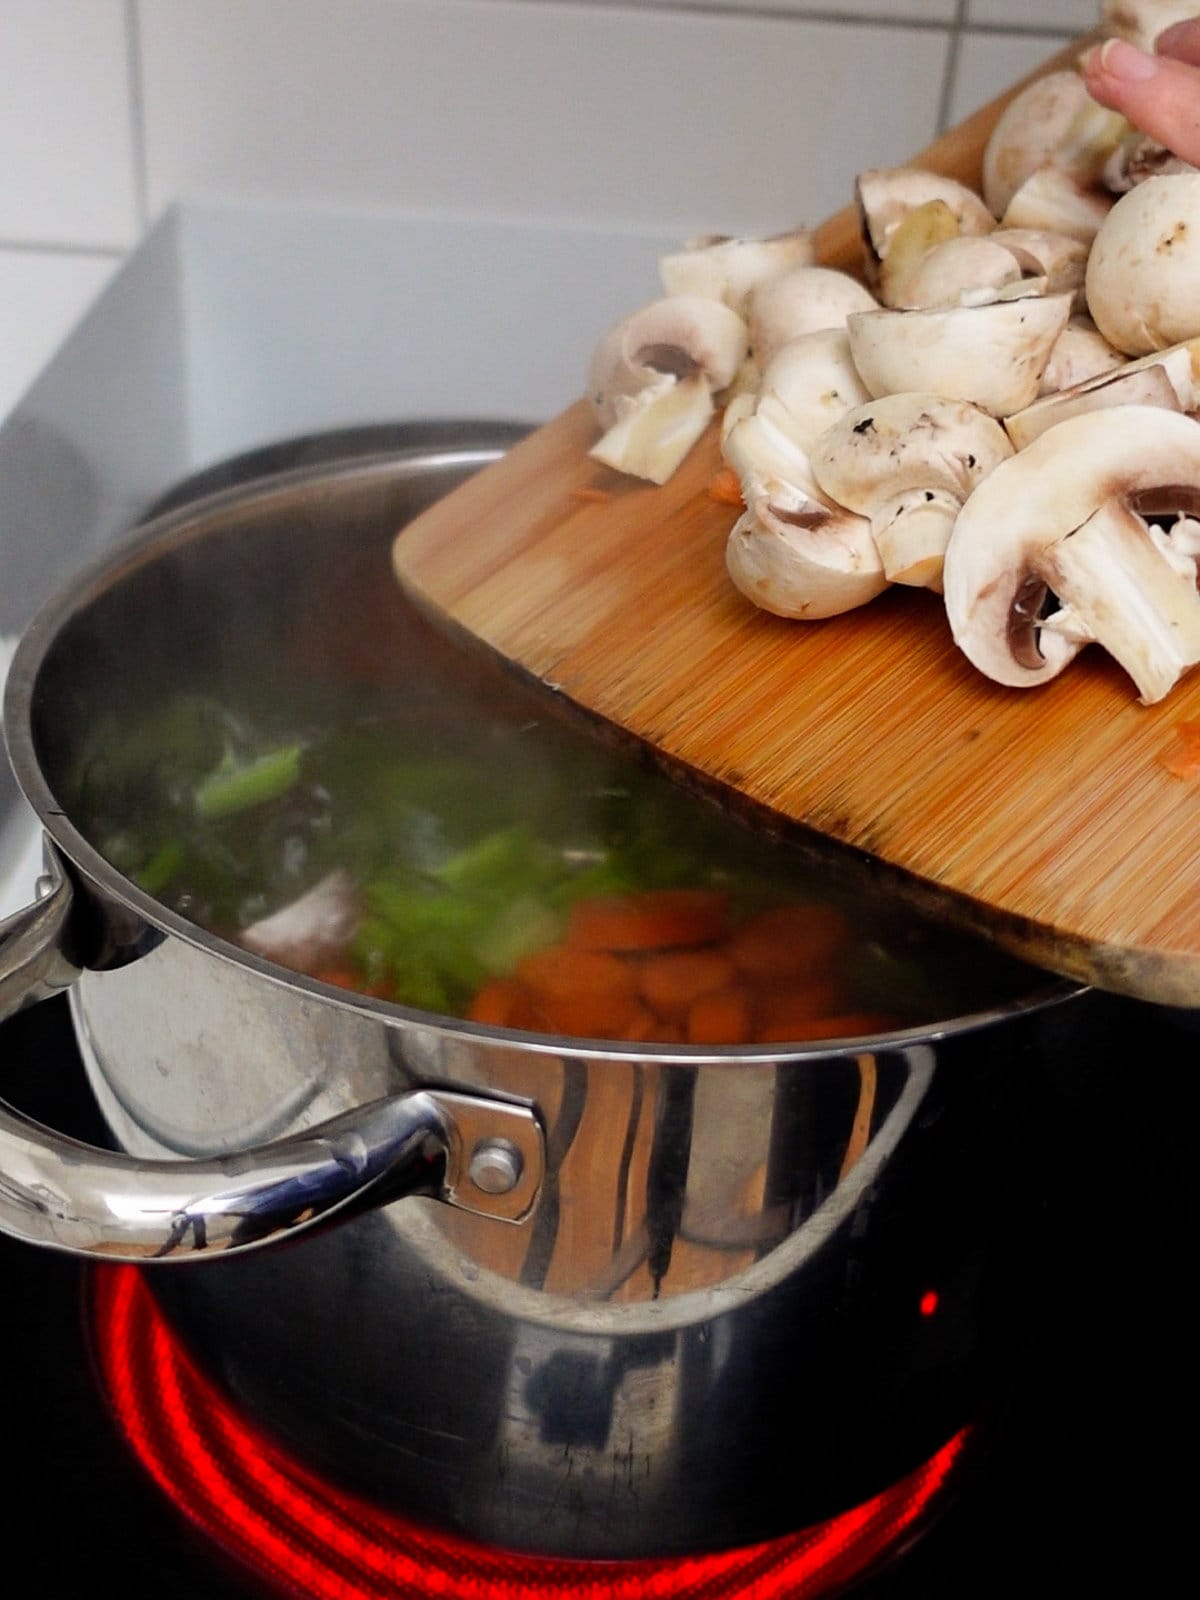 Add chopped mushrooms